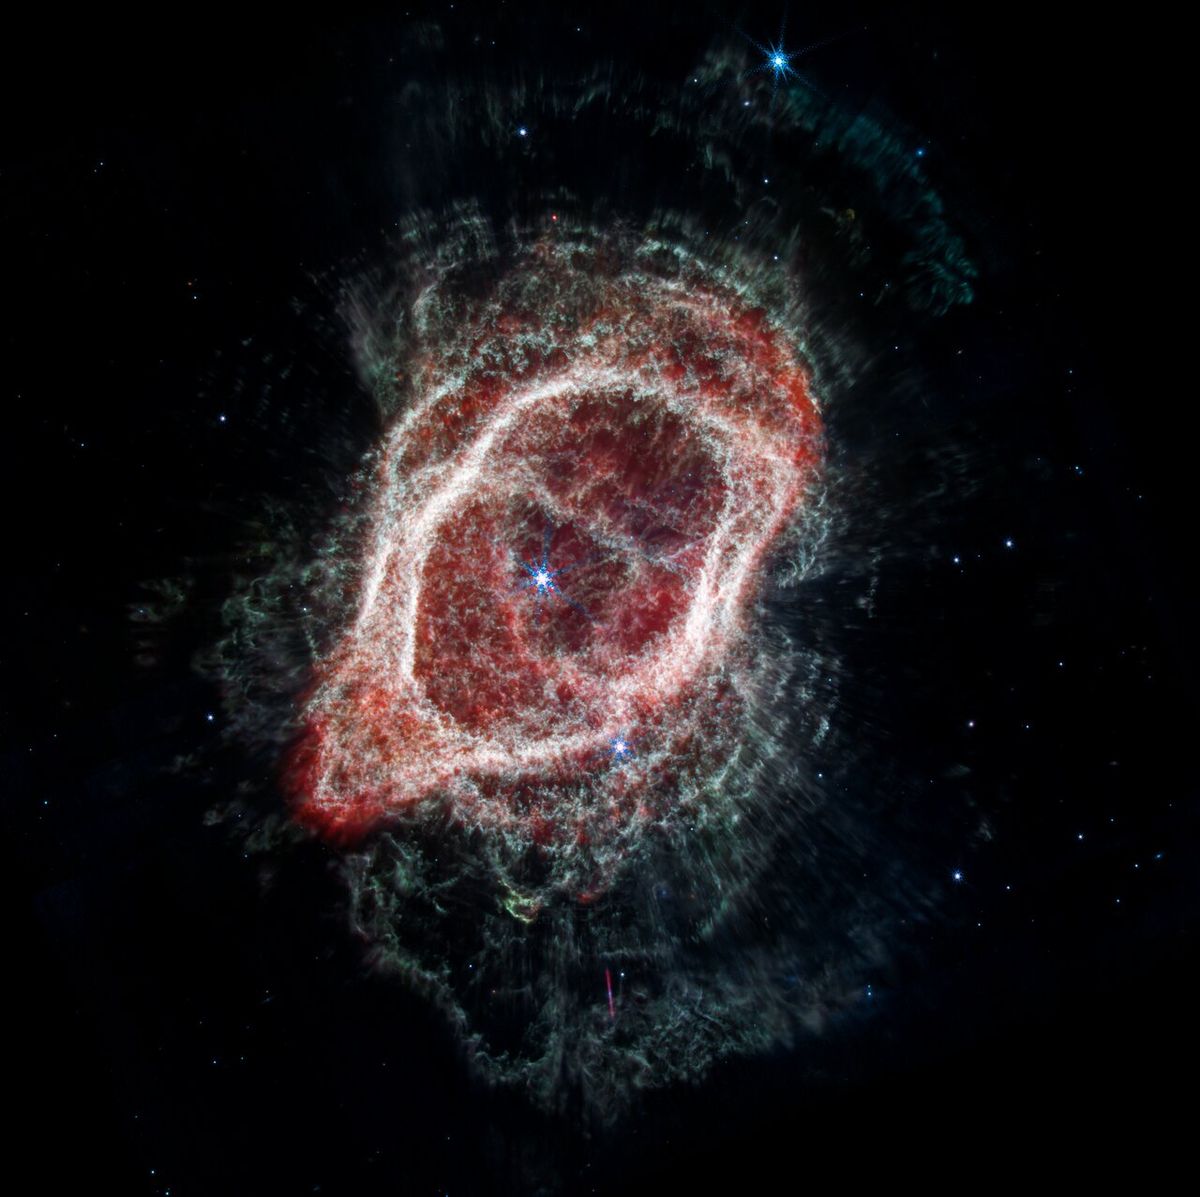 'we were amazed': scientists find hidden structure in nebula captured by james webb telescope